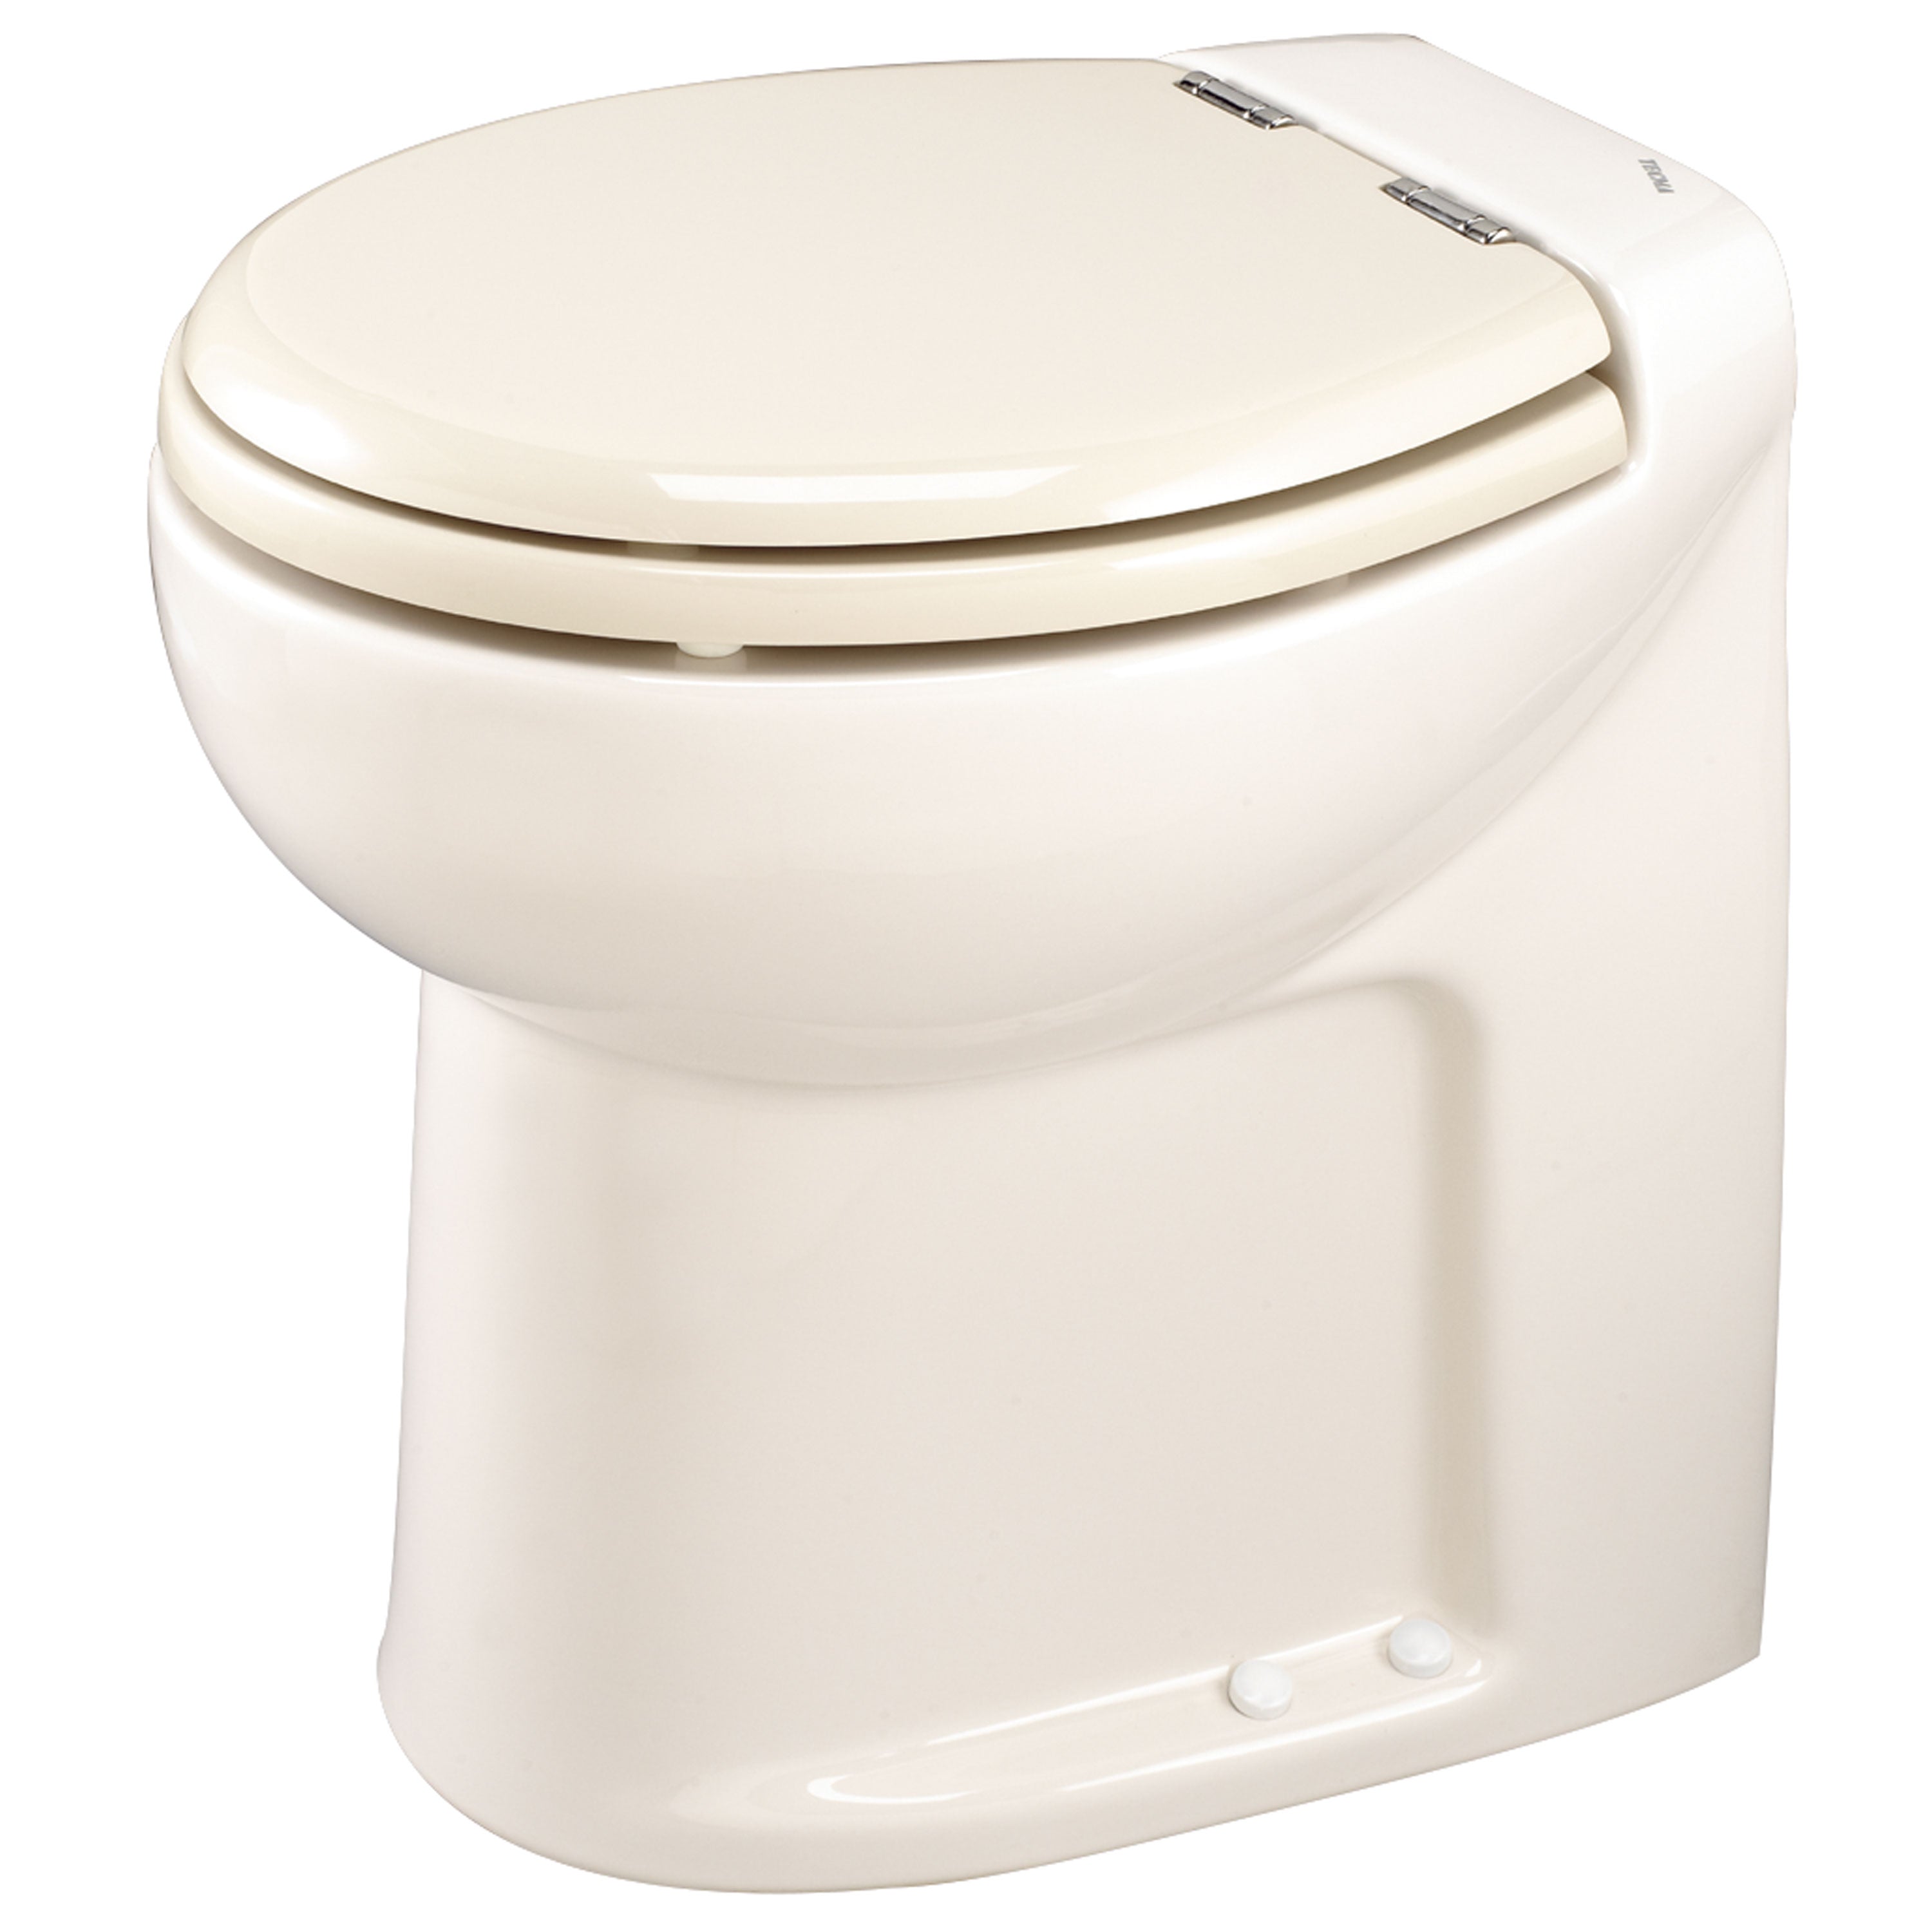 Thetford 38044 Tecma Silence 1 Mode, 12V Toilet with Water Pump - High Profile, White